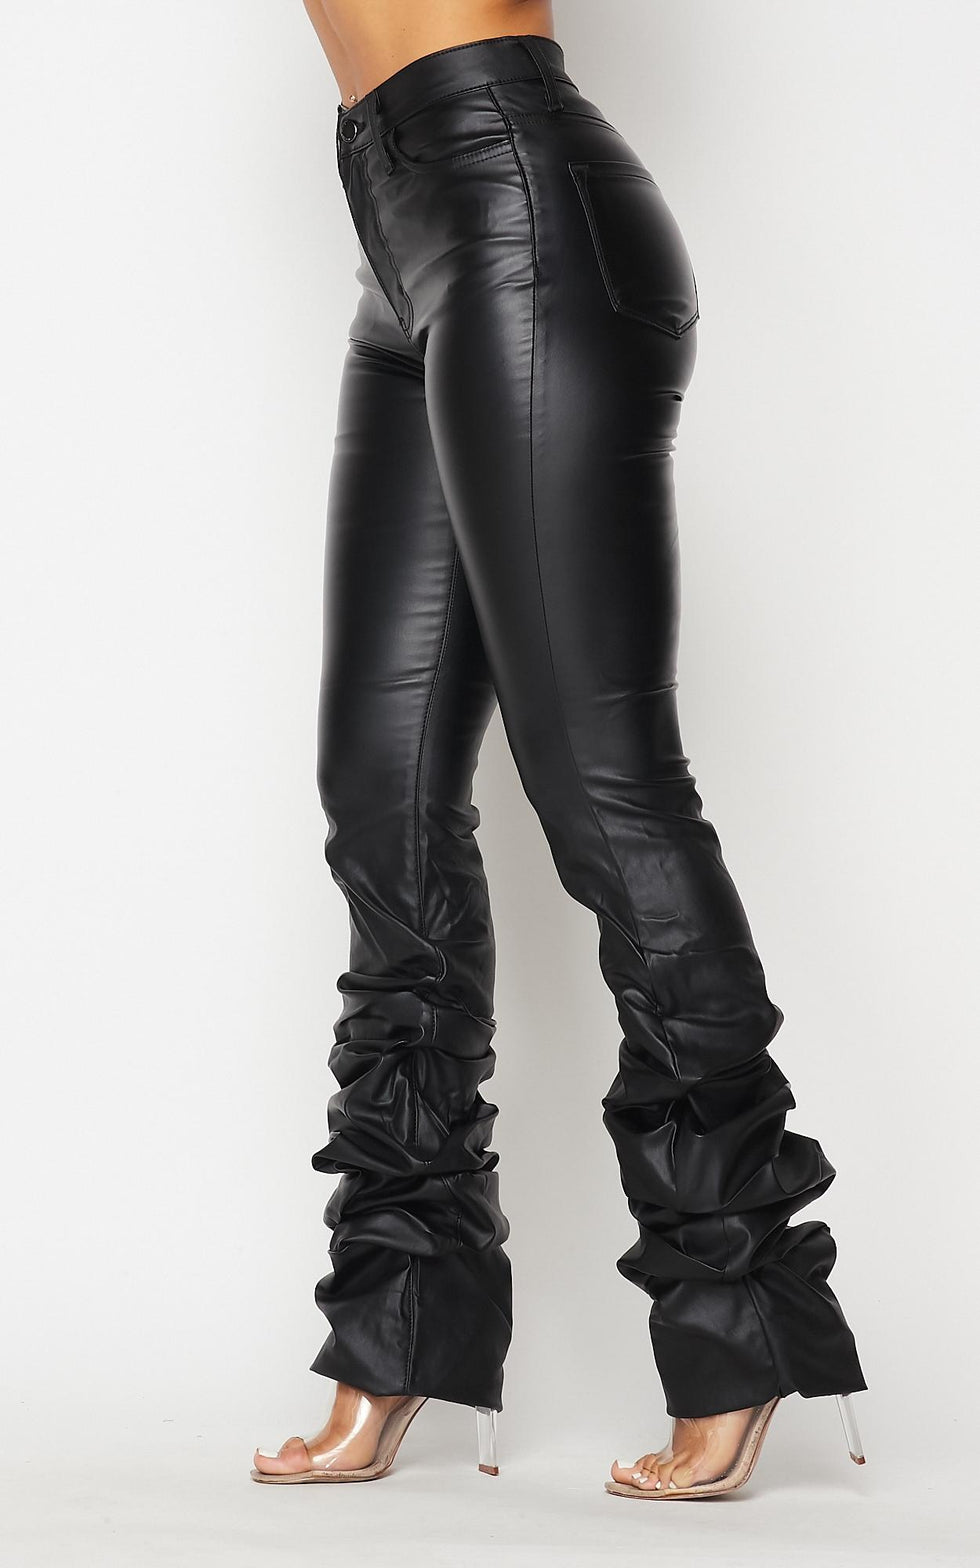 Vibrant Jeans Scrunch Up Bootcut Black Faux Leather Pants | SohoGirl.com